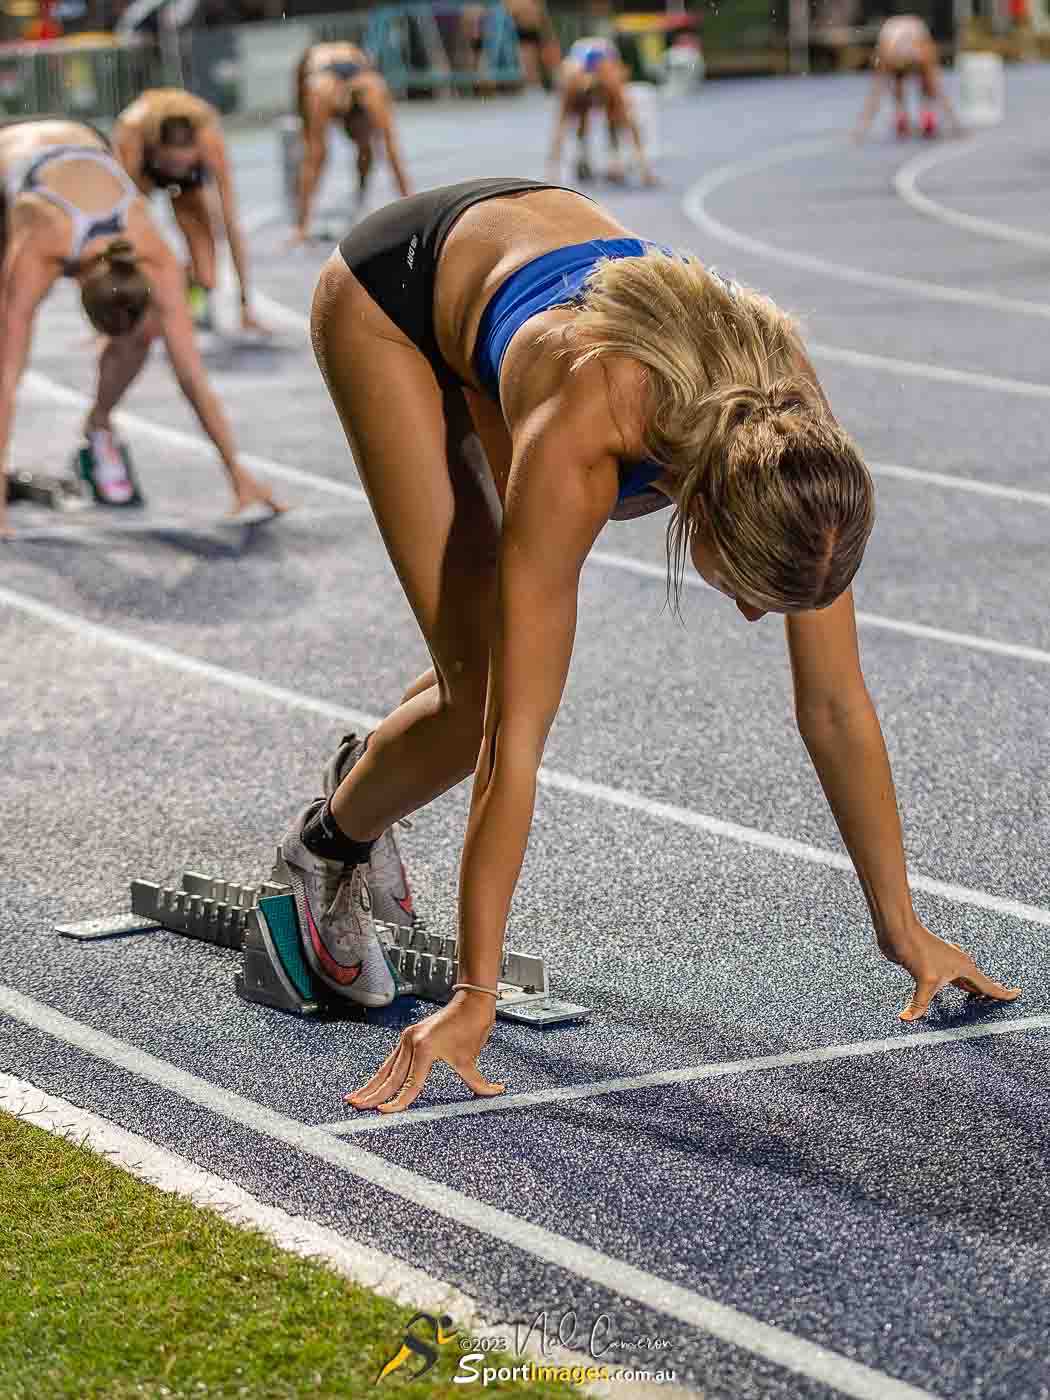 Francesca MacDonald, Women Open 400m